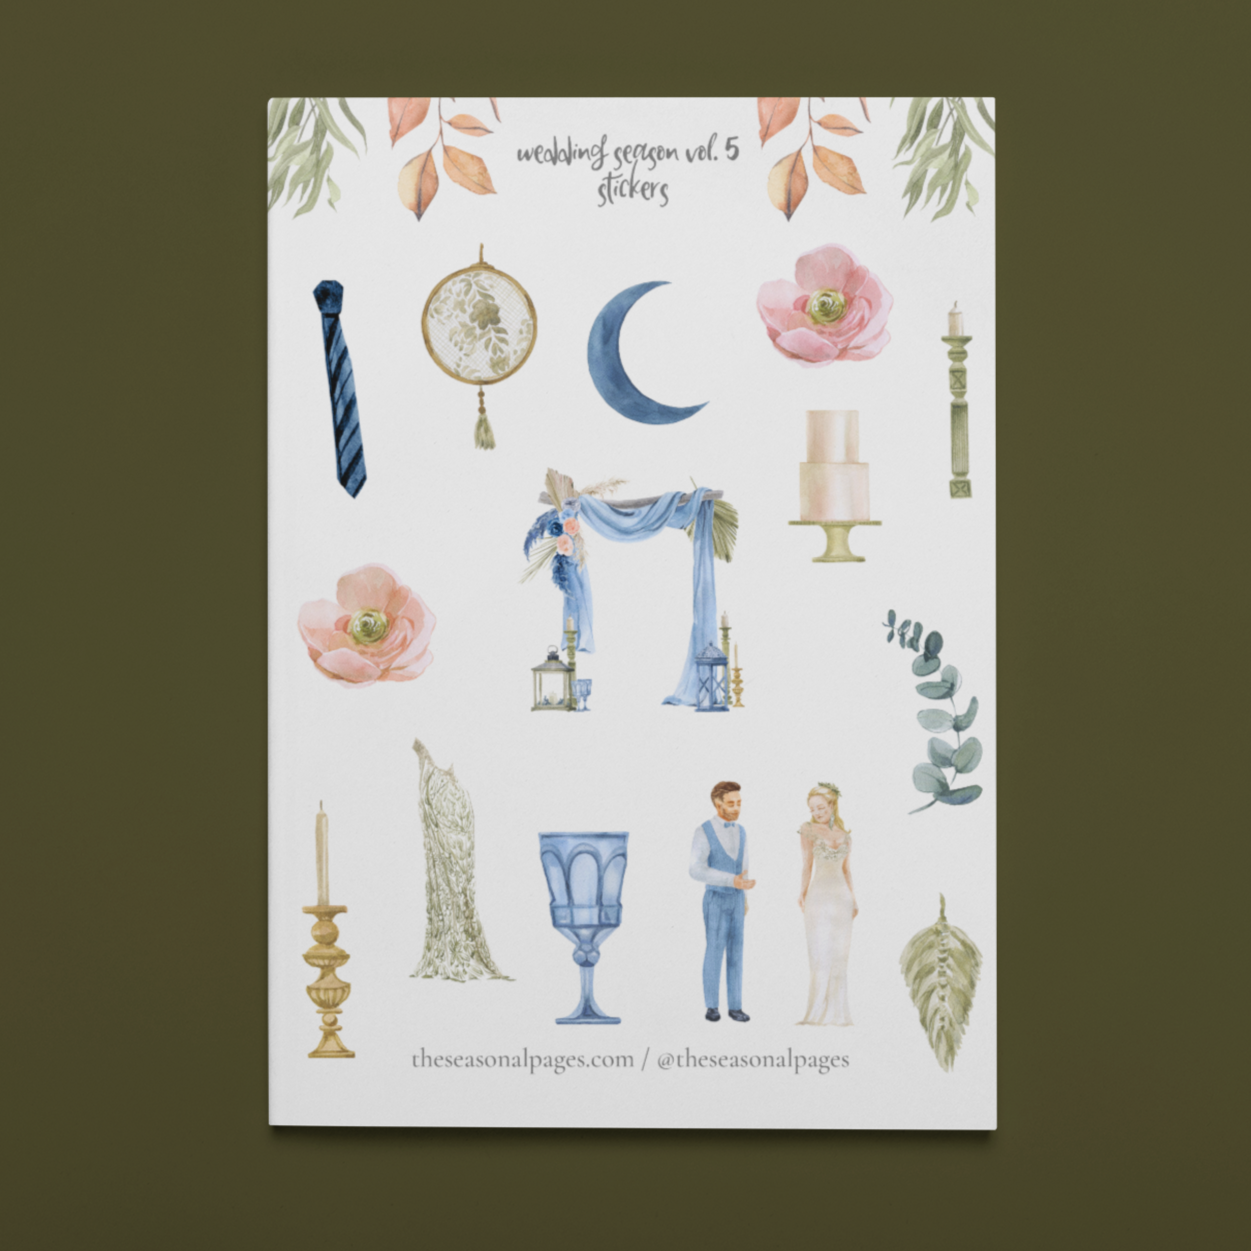 Printable Wedding Season Vol. 5 Sticker Set